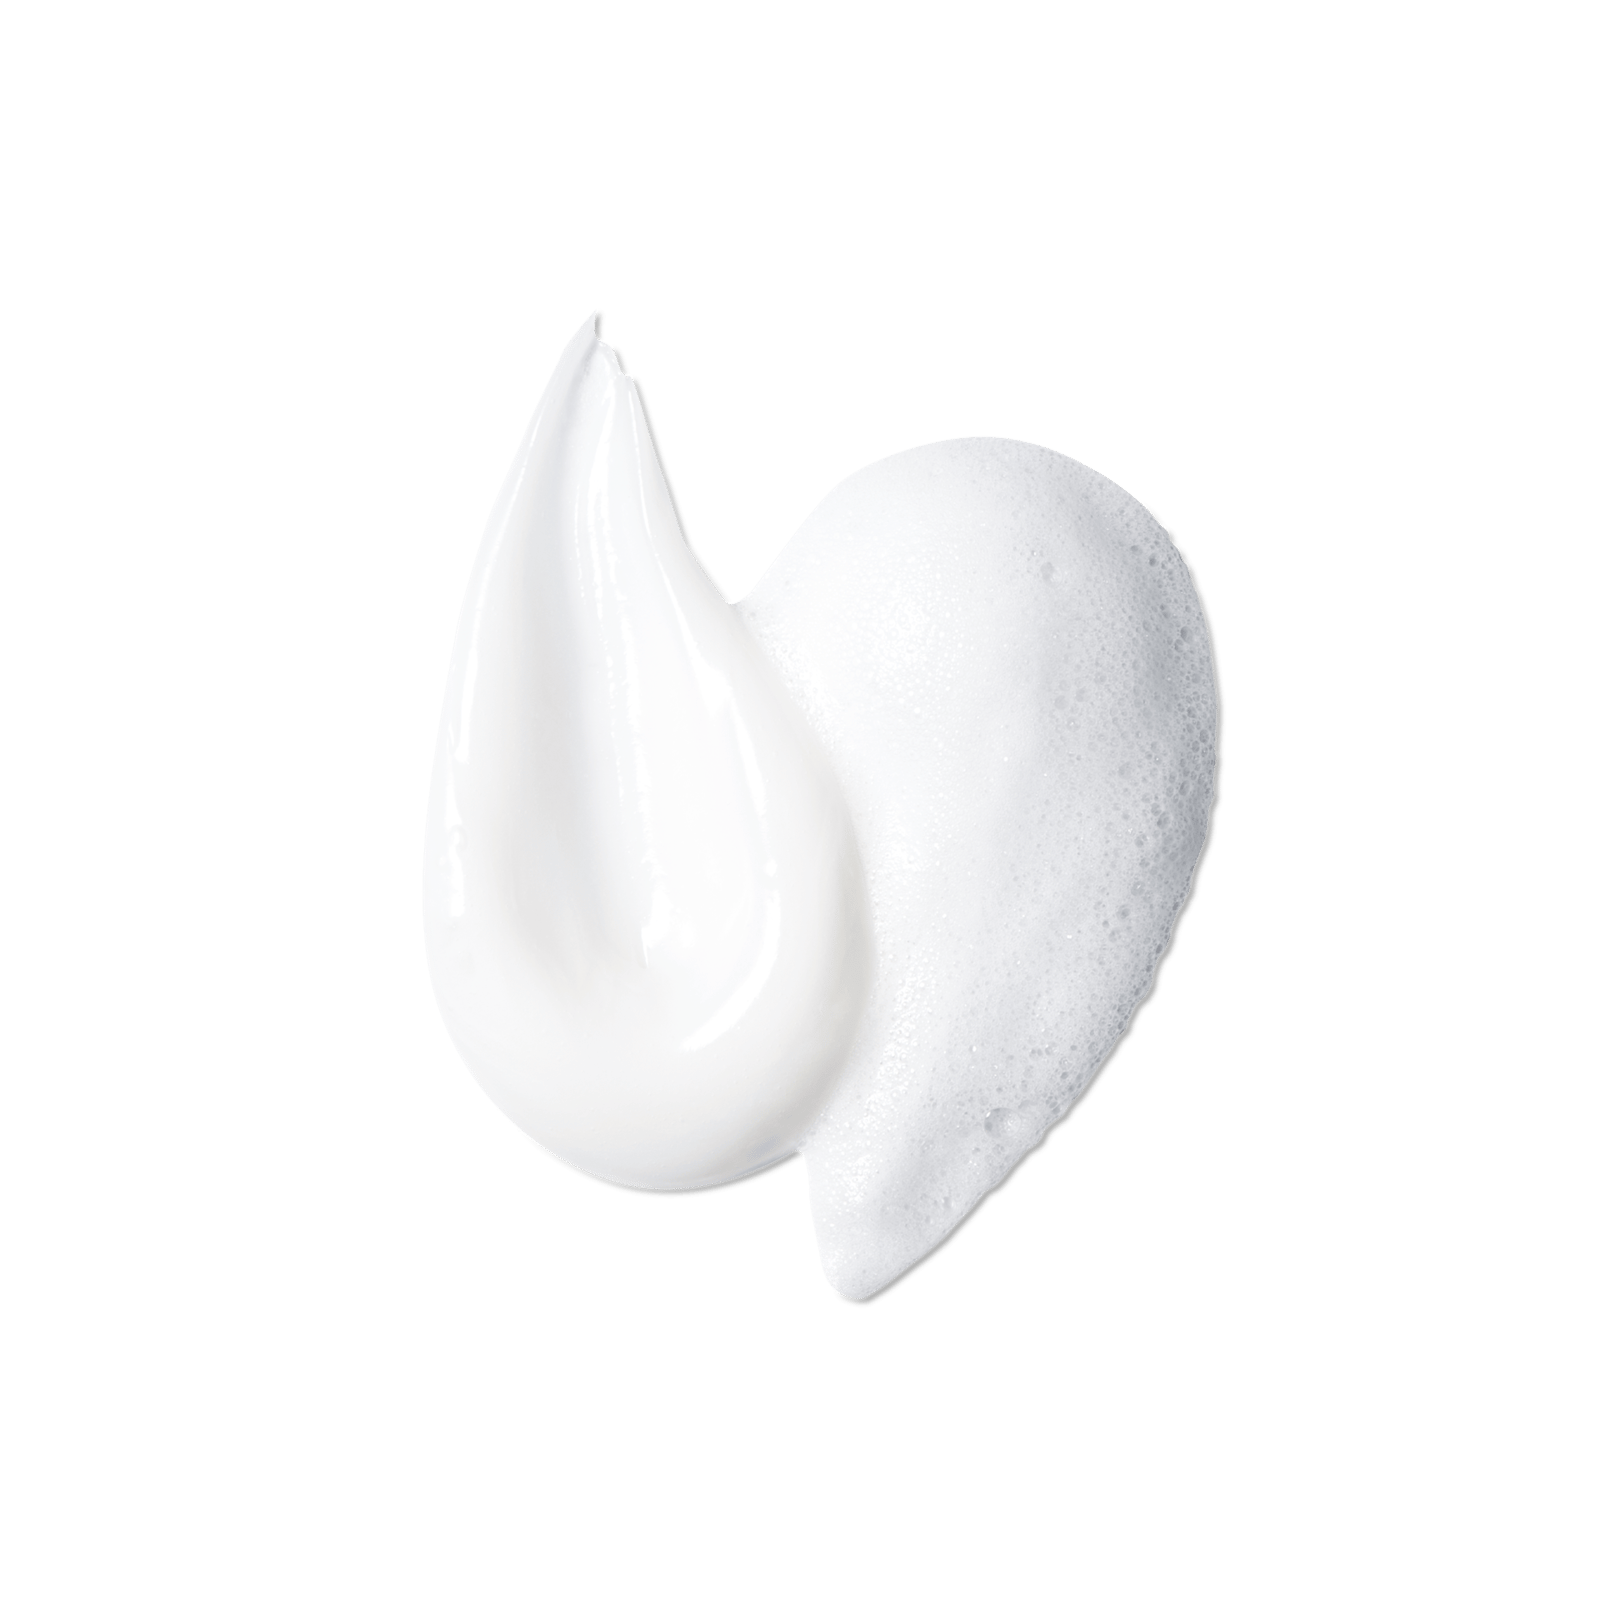 FOREO LUNA™ Micro-Foam Cleanser 2.0 100 ml